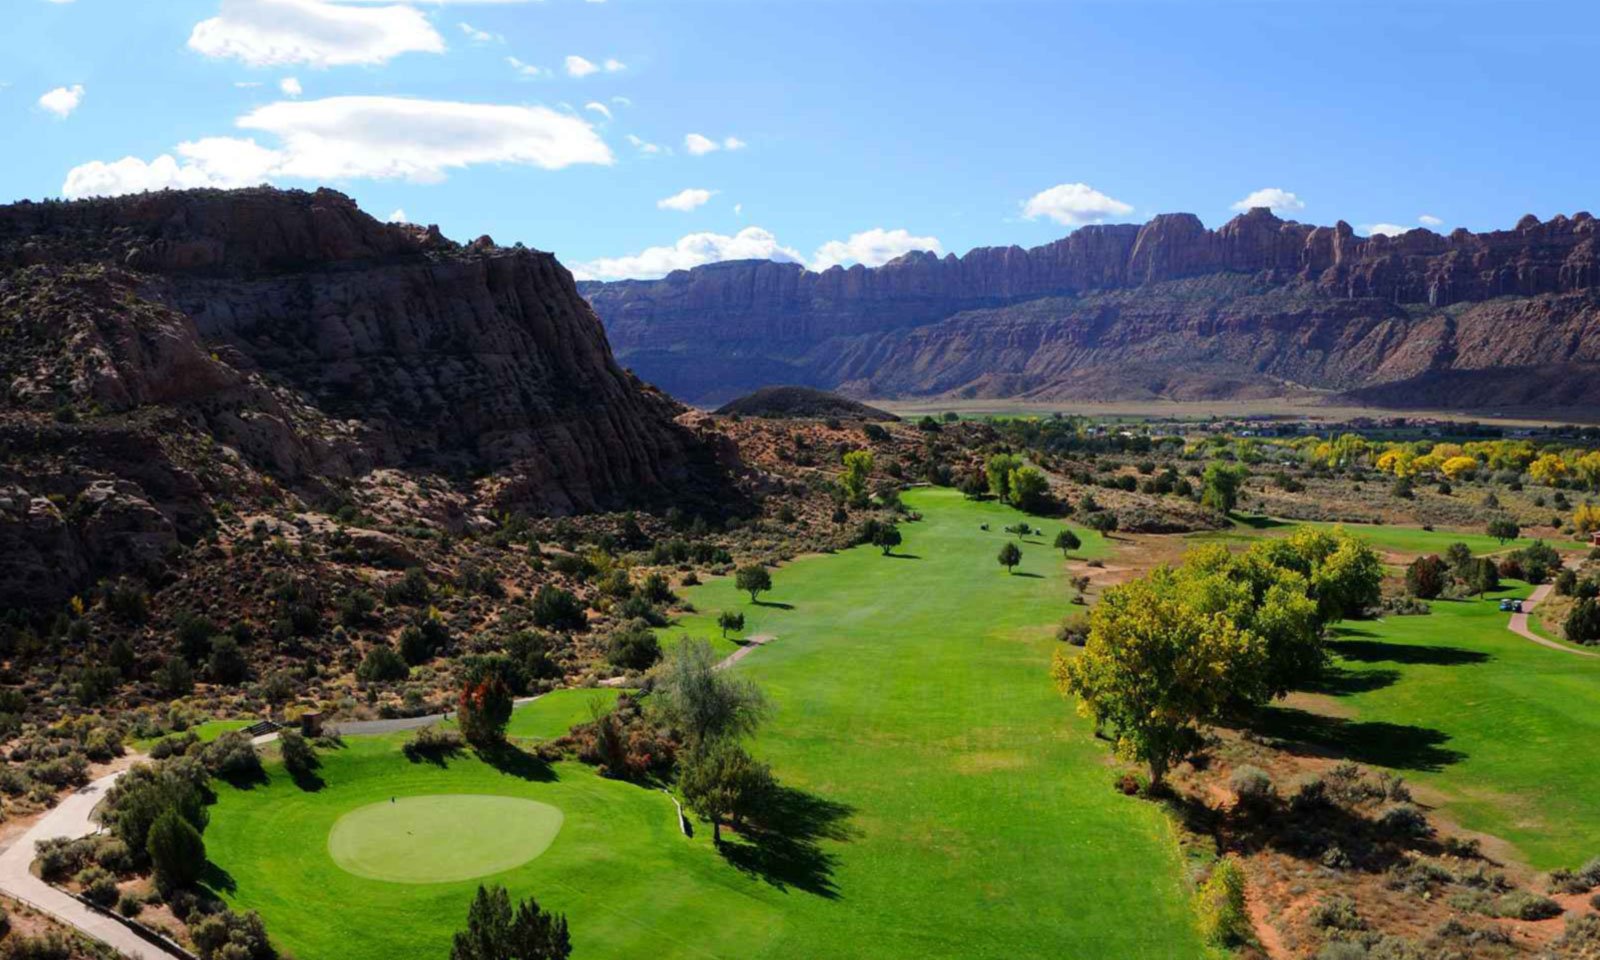 Utah - Moab golf course